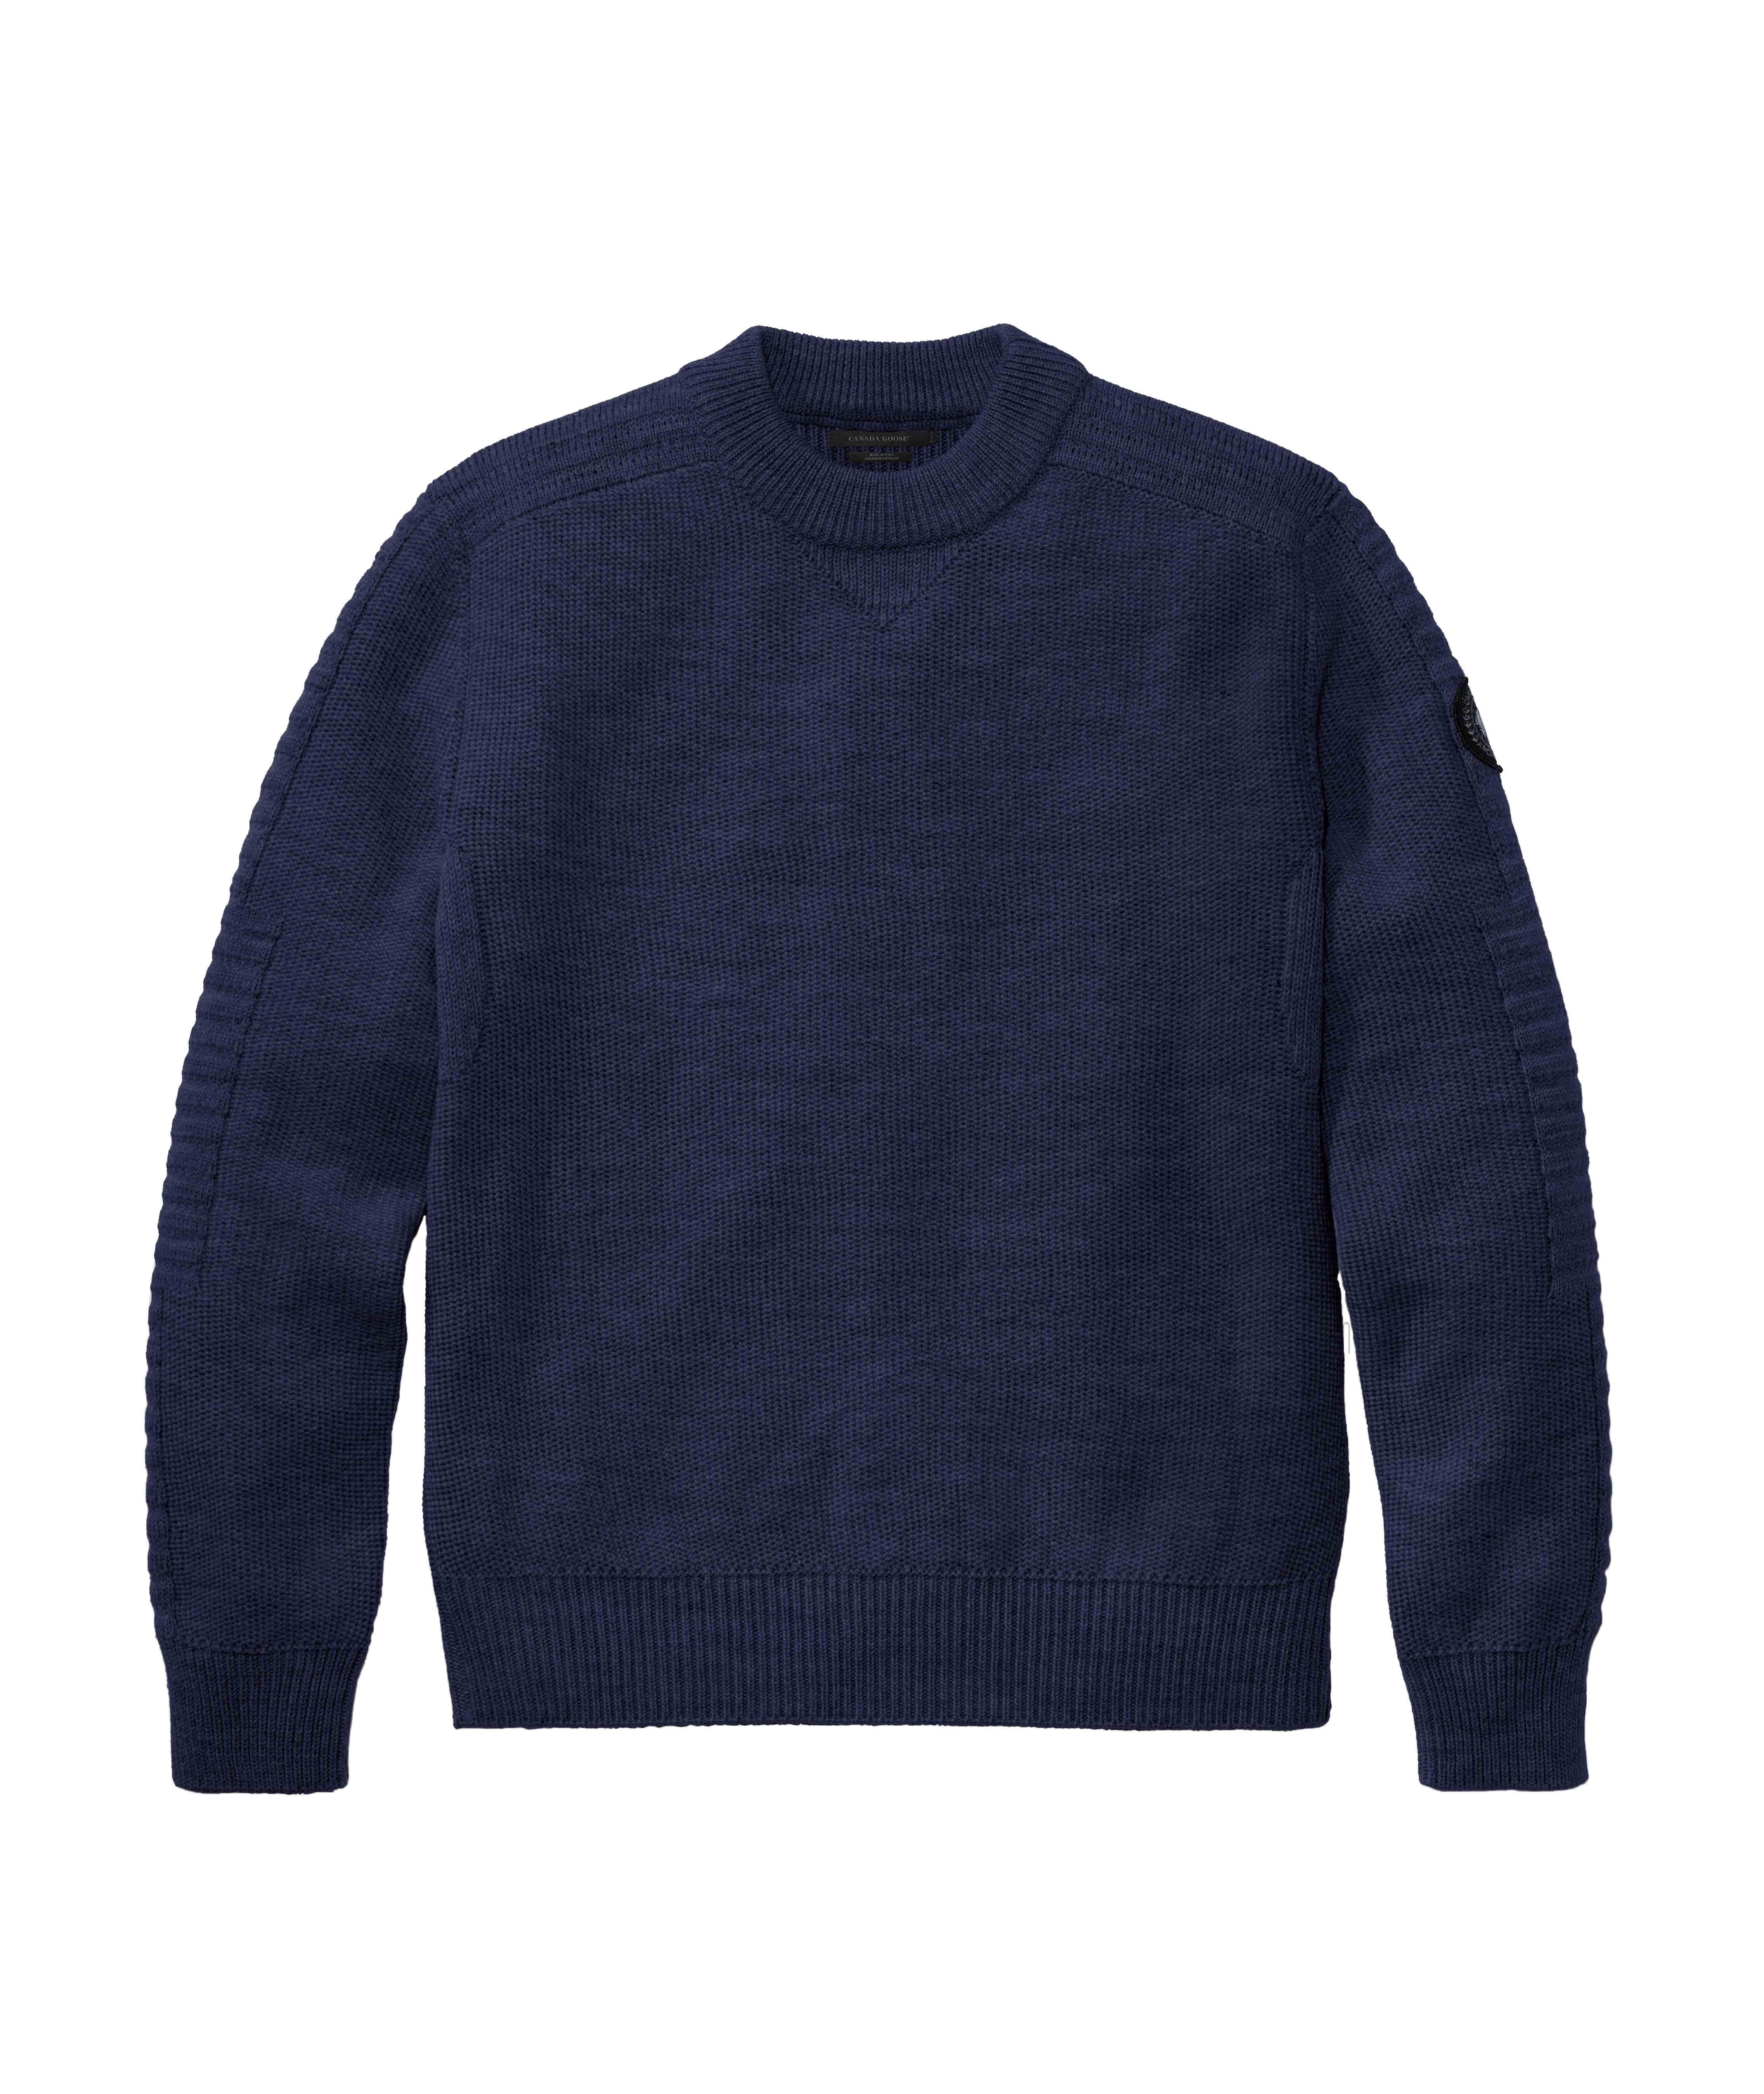 Paterson Merino Wool Sweater image 0